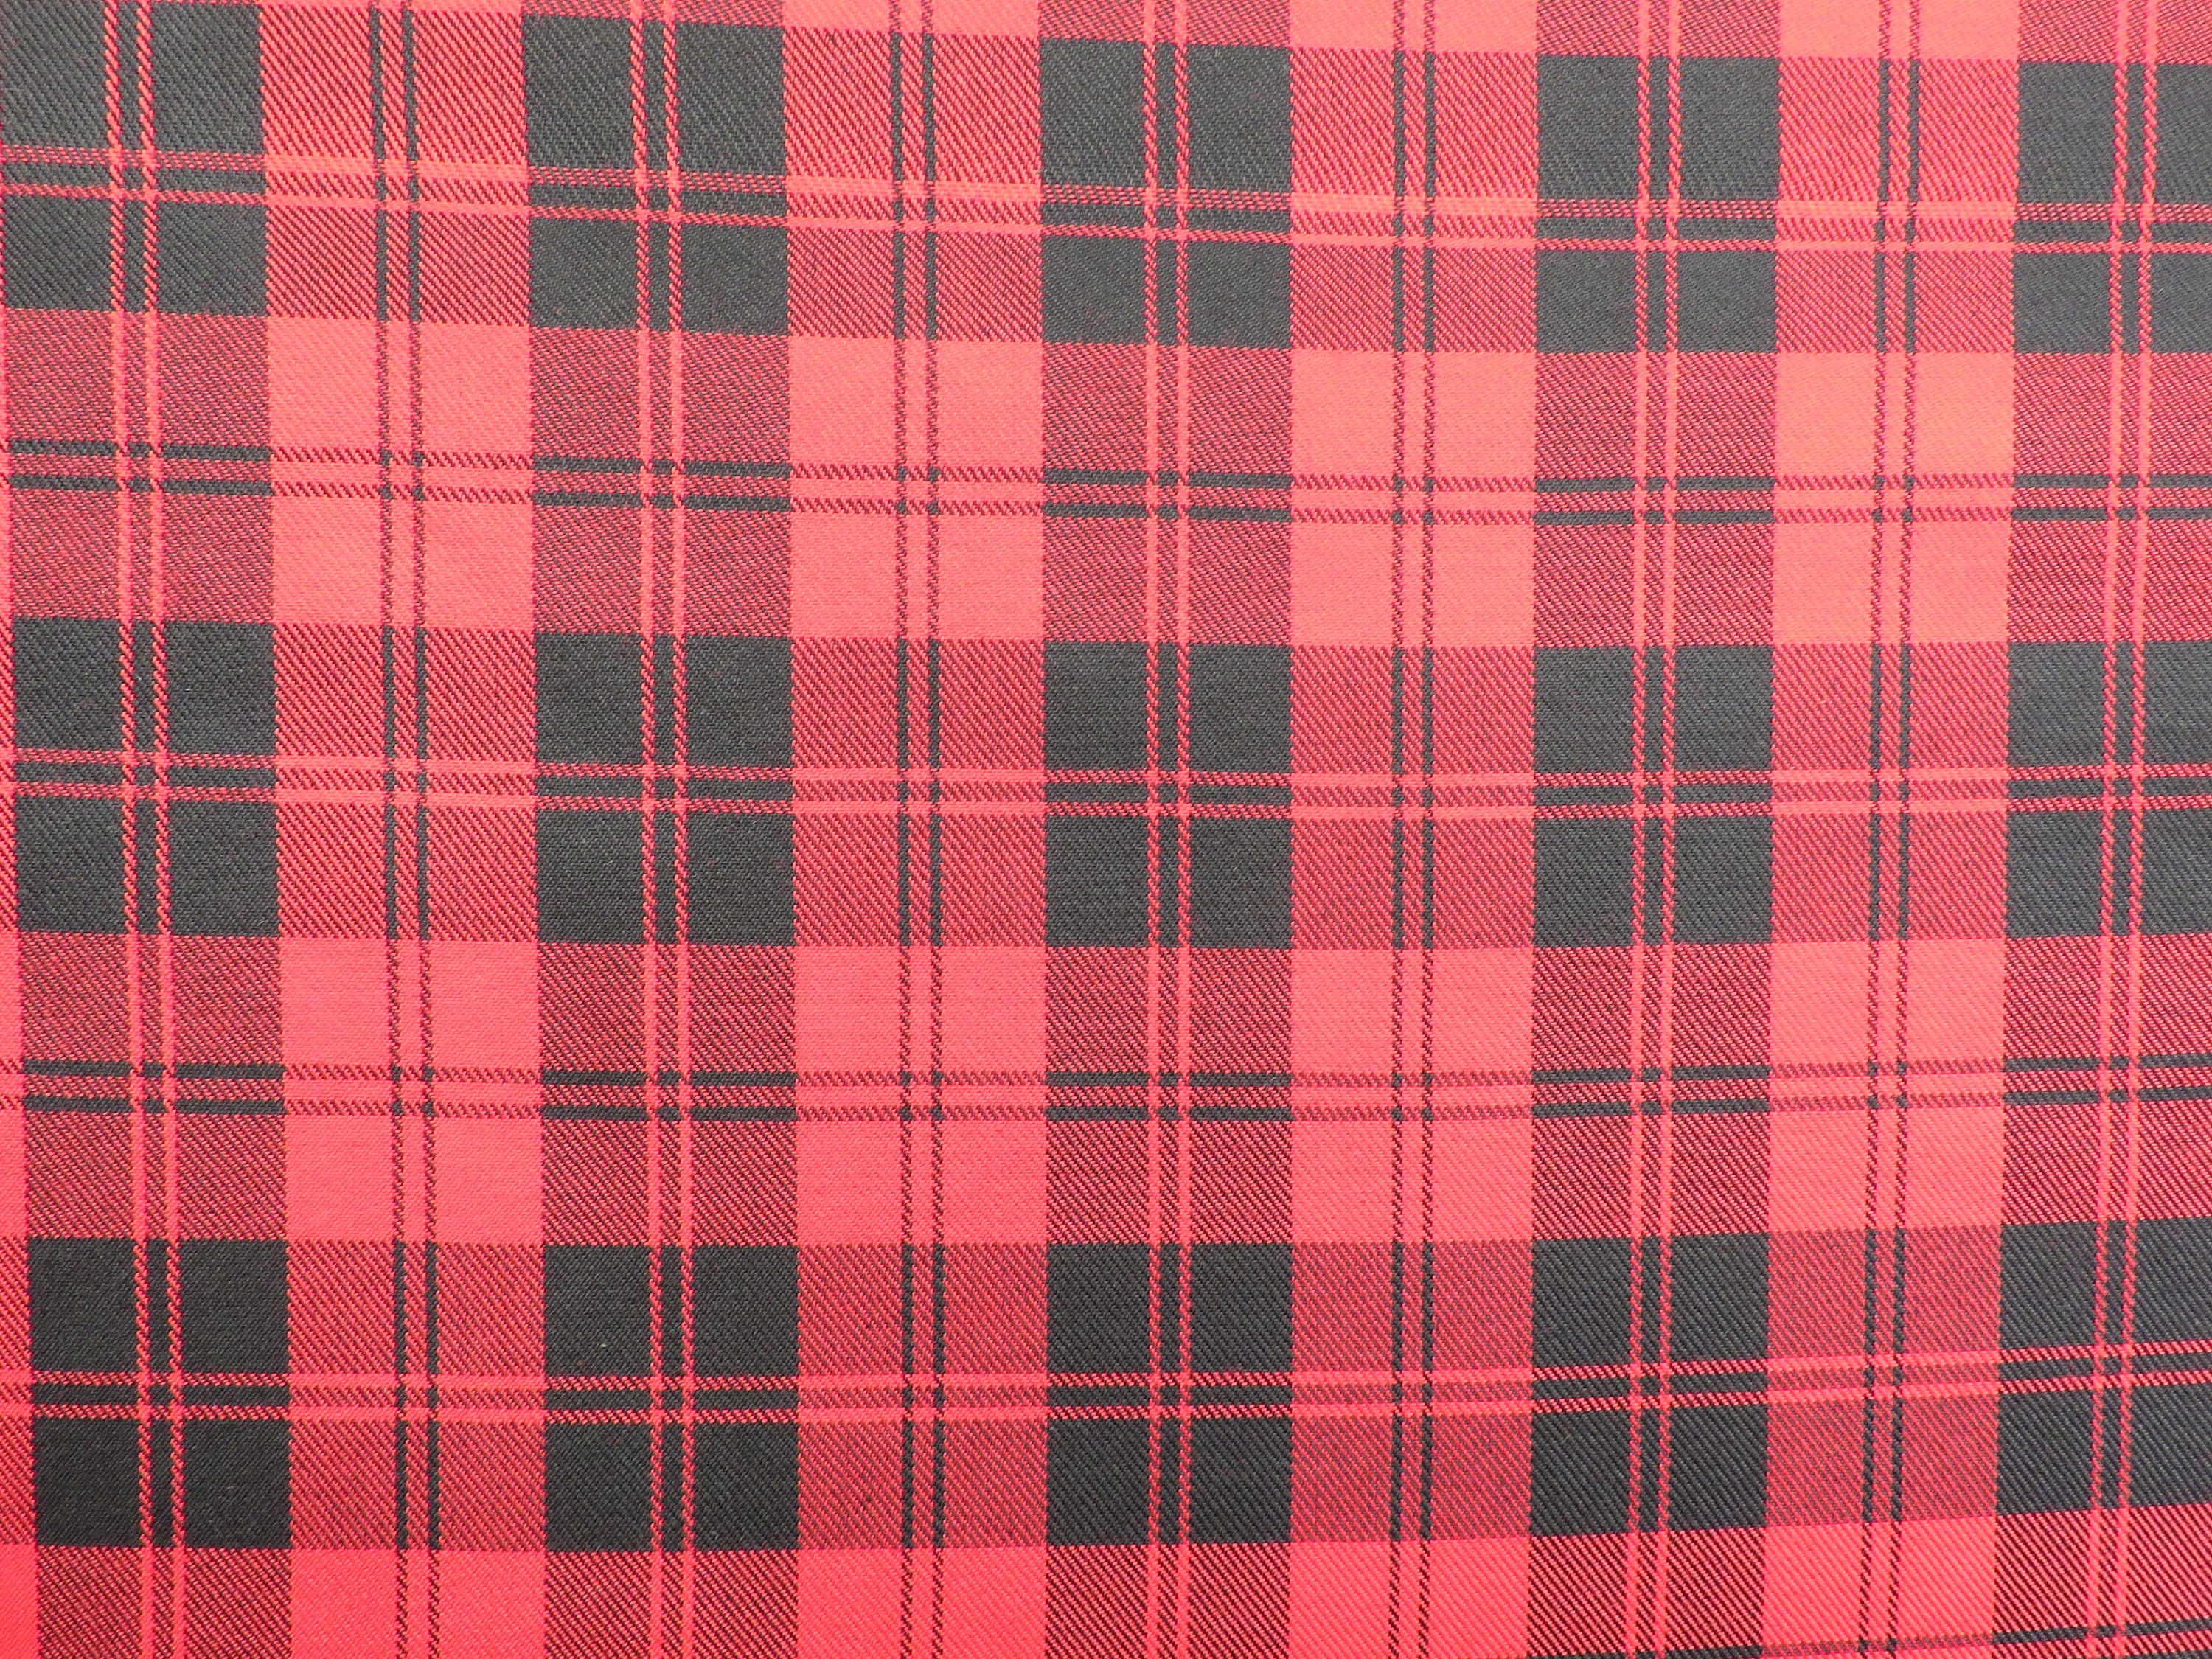 Lumberjack Plaid Fabric, Red and Black Pattern Tartan Fabric Print